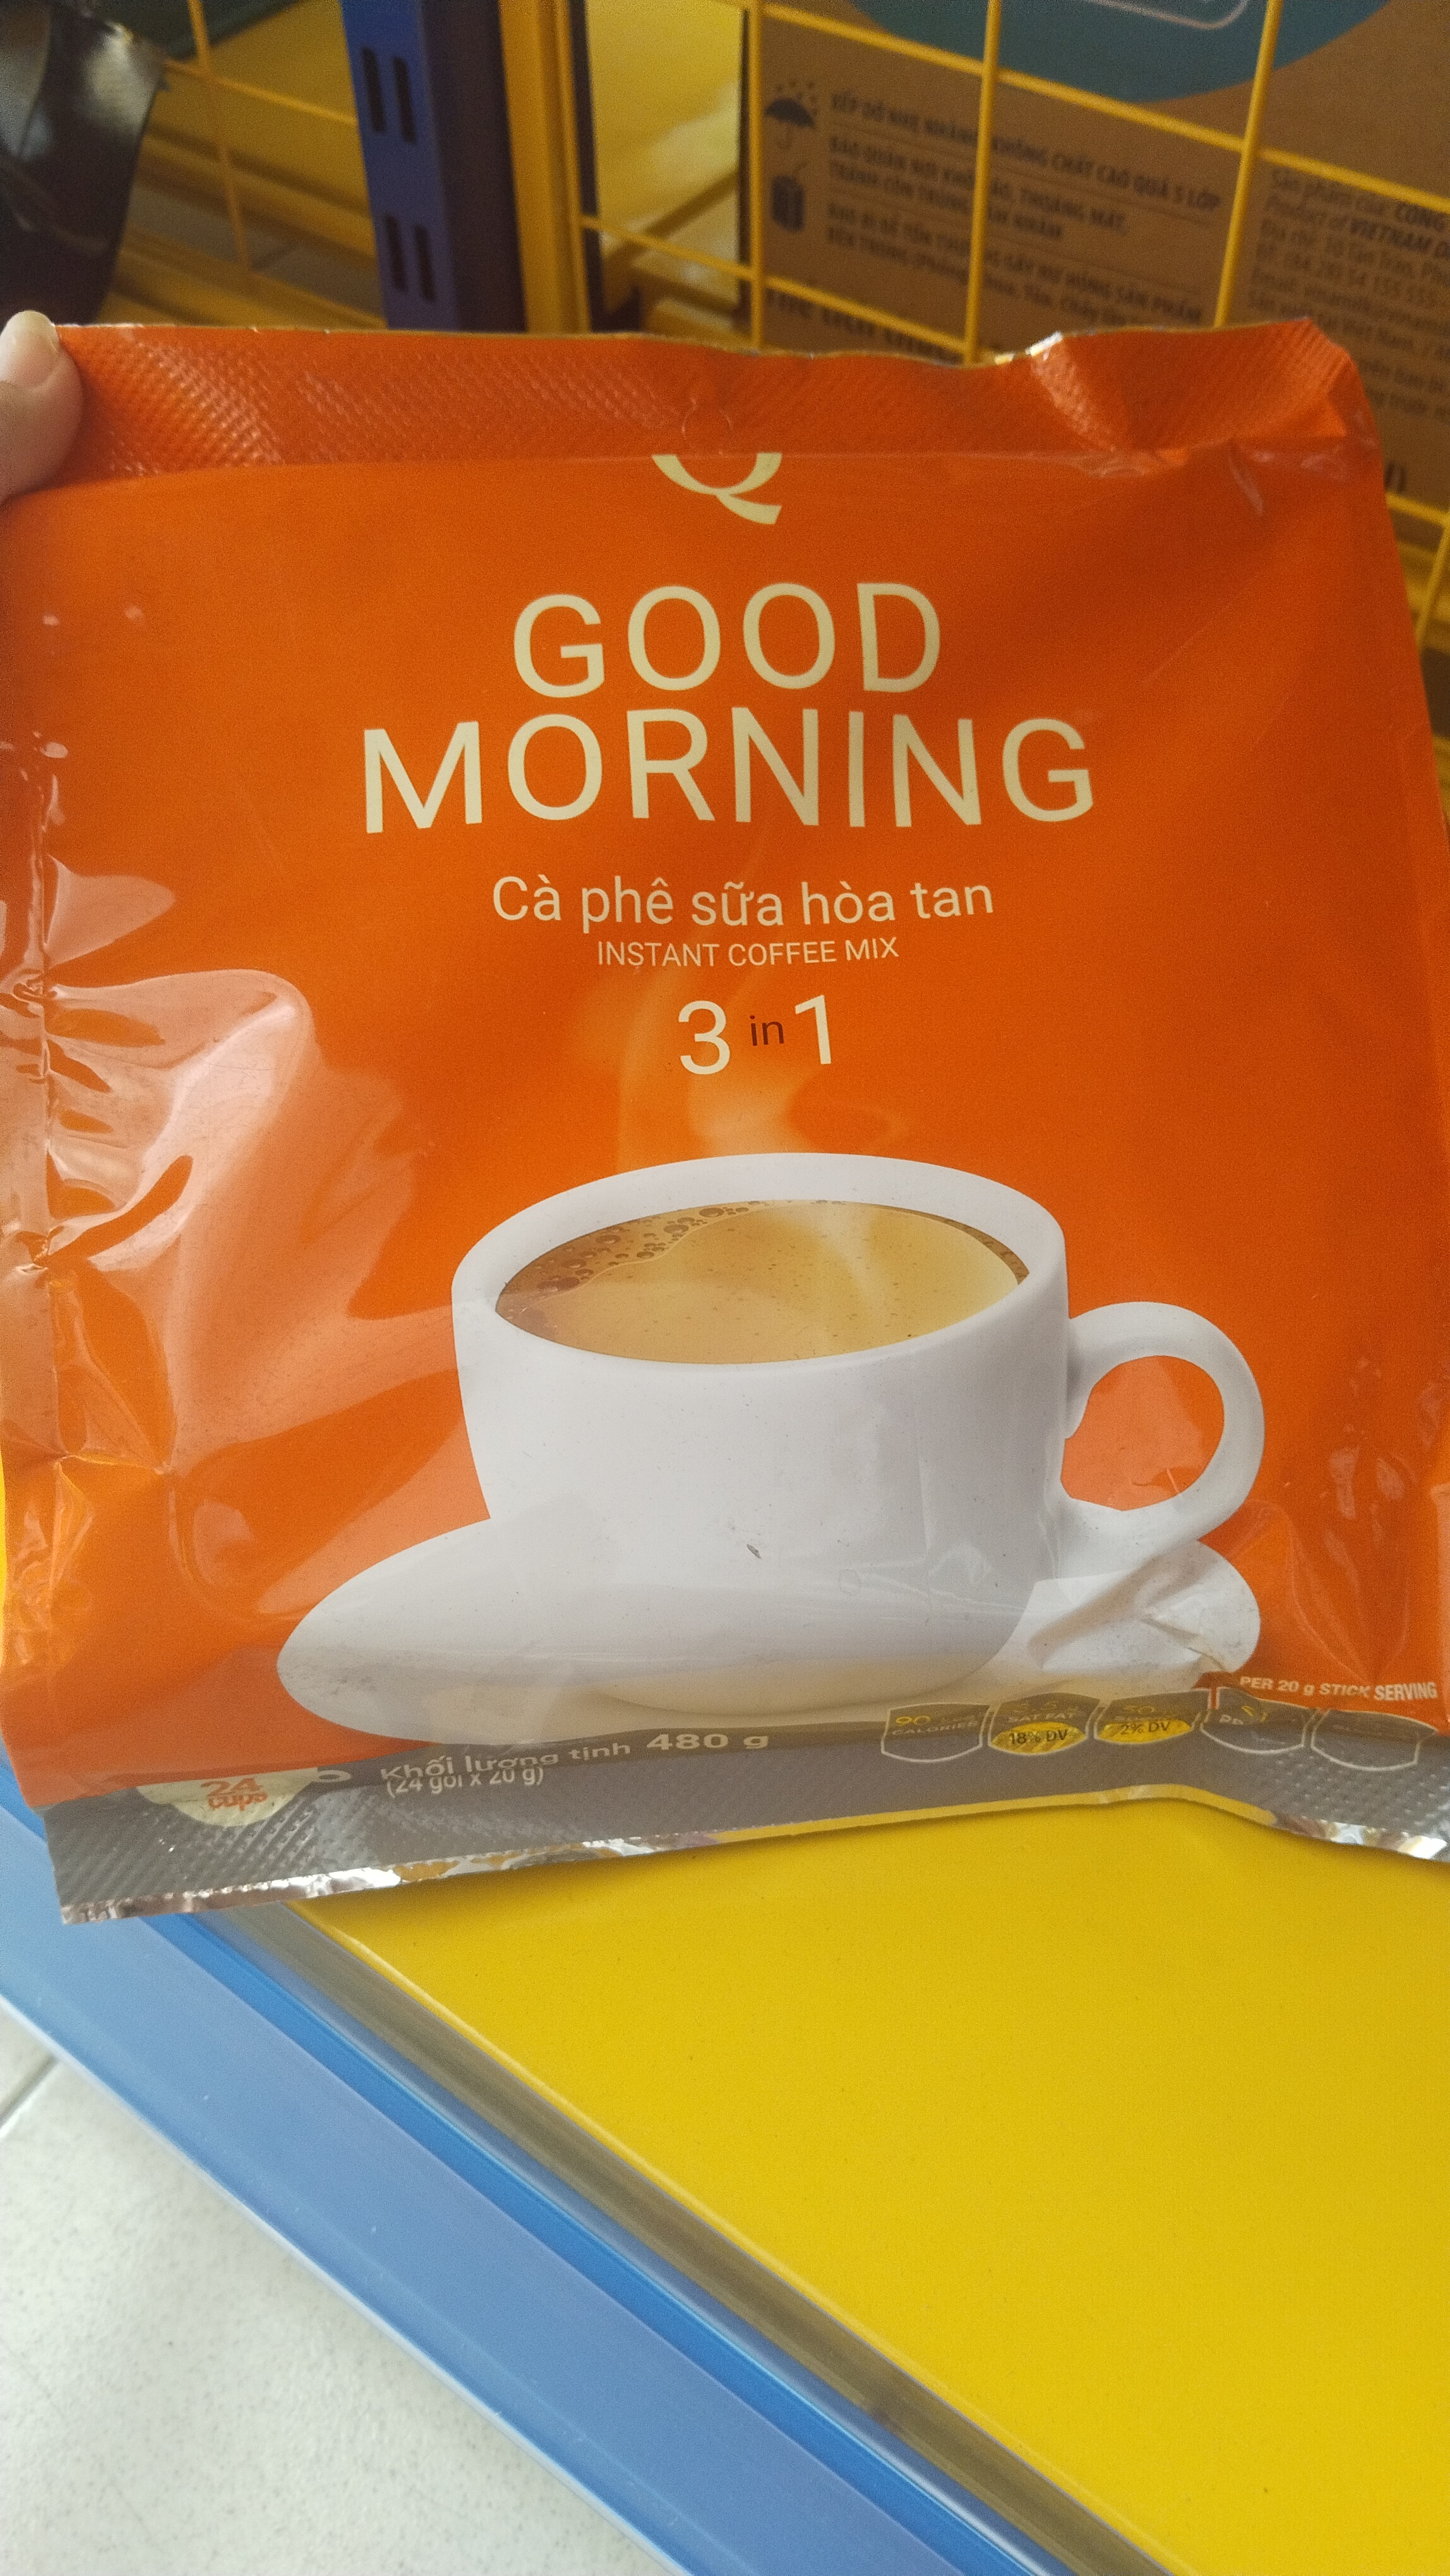 Cà phê sữa Goomoning 3 in 1